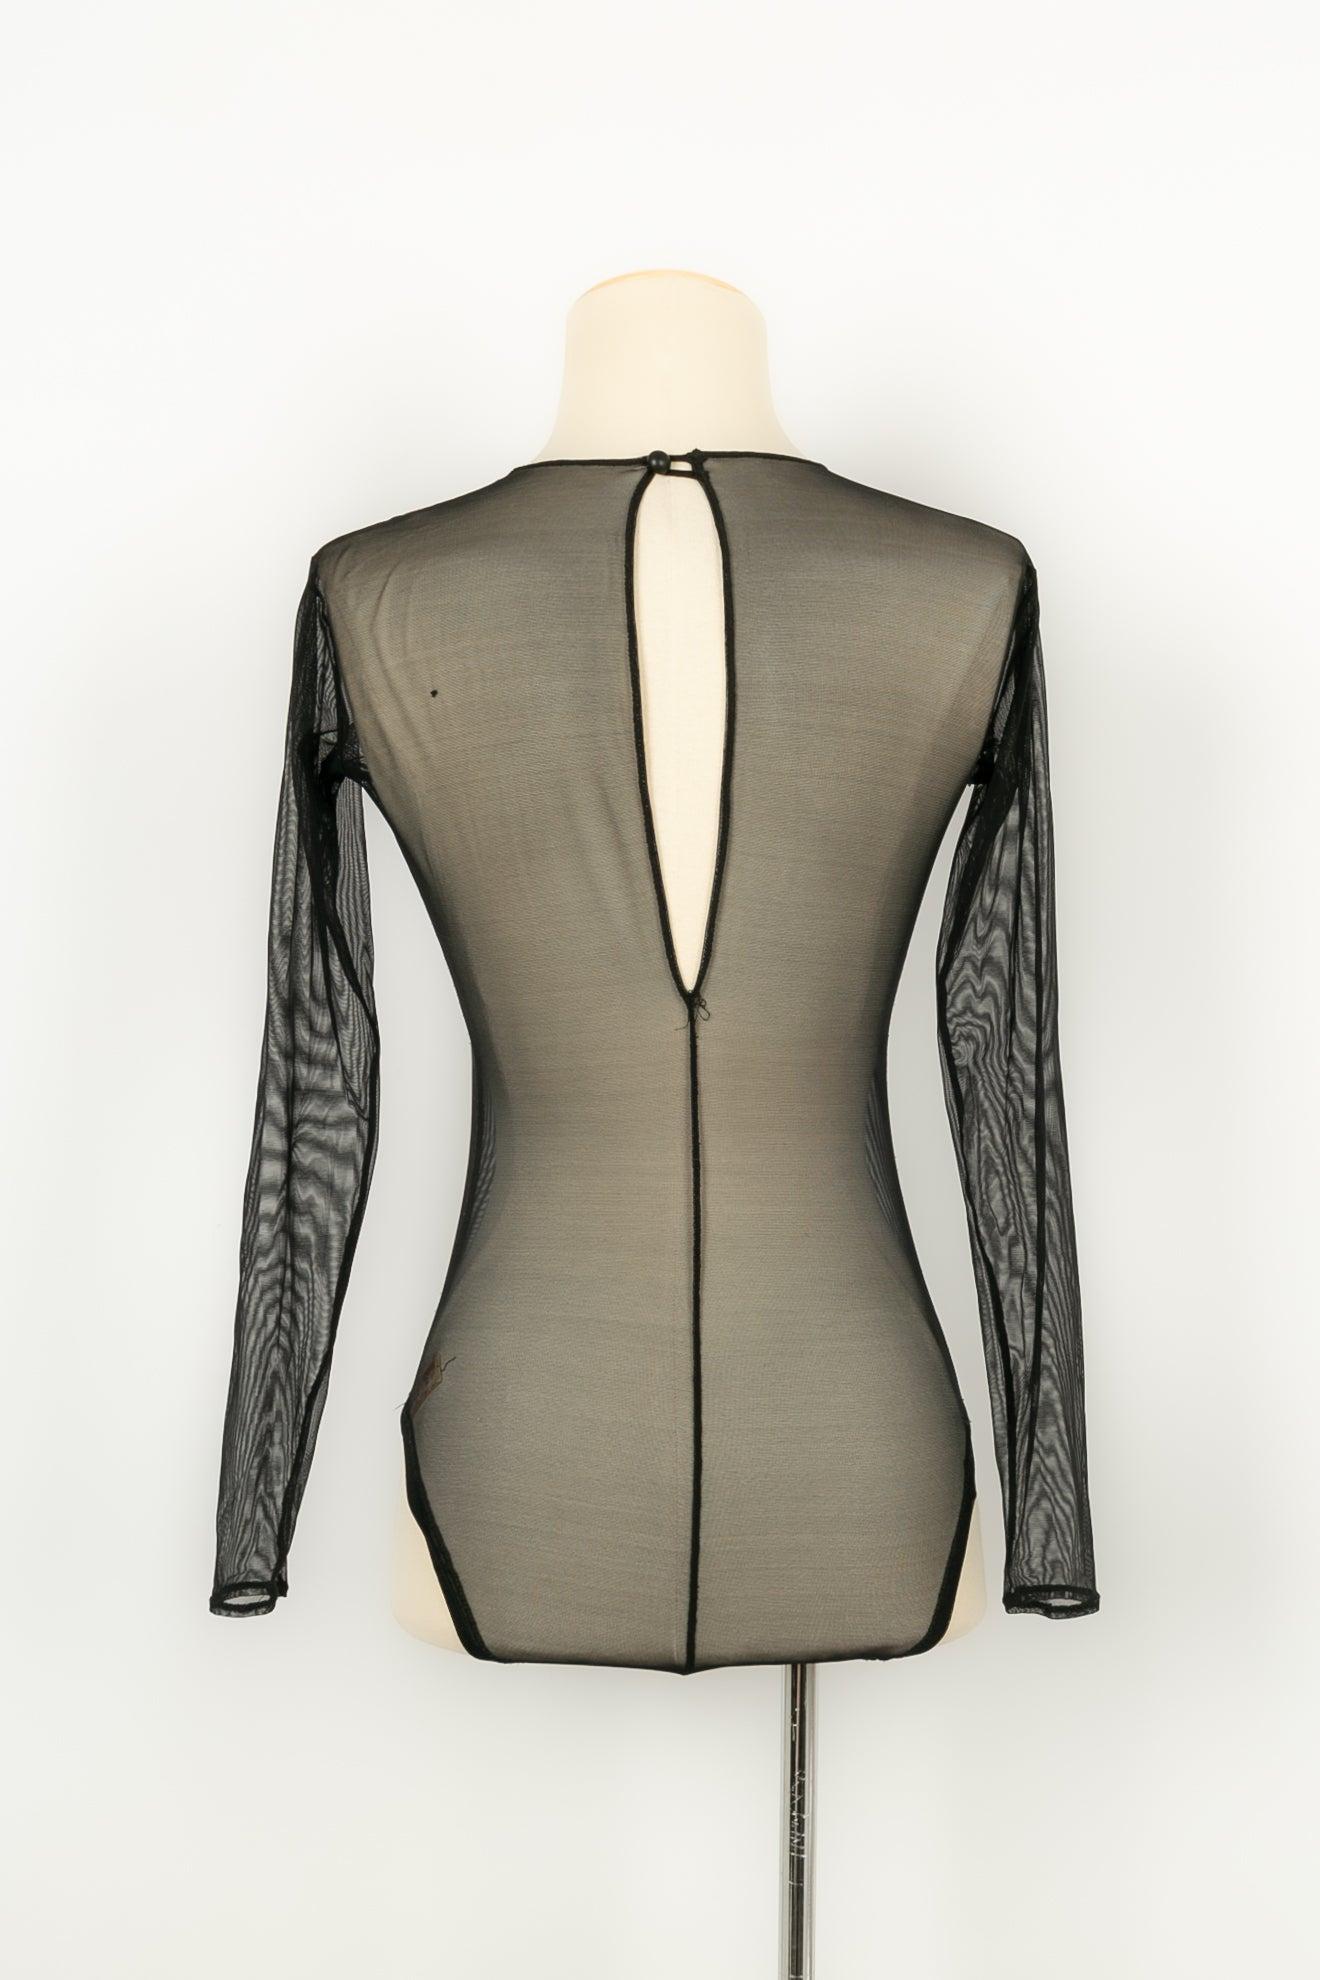 Christian Lacroix Haute Couture Set Composed of Black Velvet Jacket For Sale 8